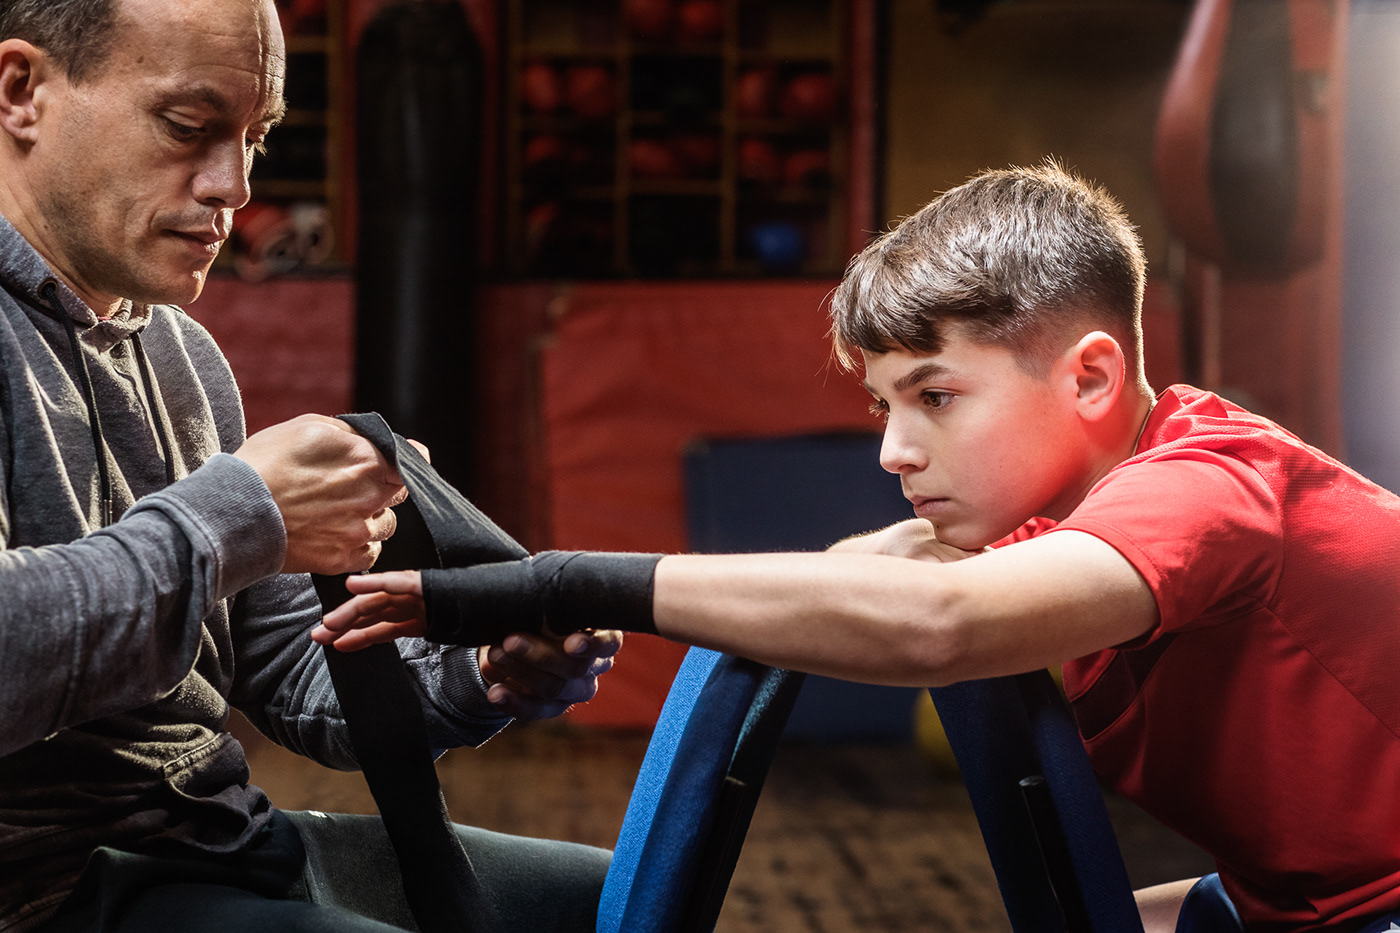 Boxing kids fight Mentor sport winning Focus portrait reportage